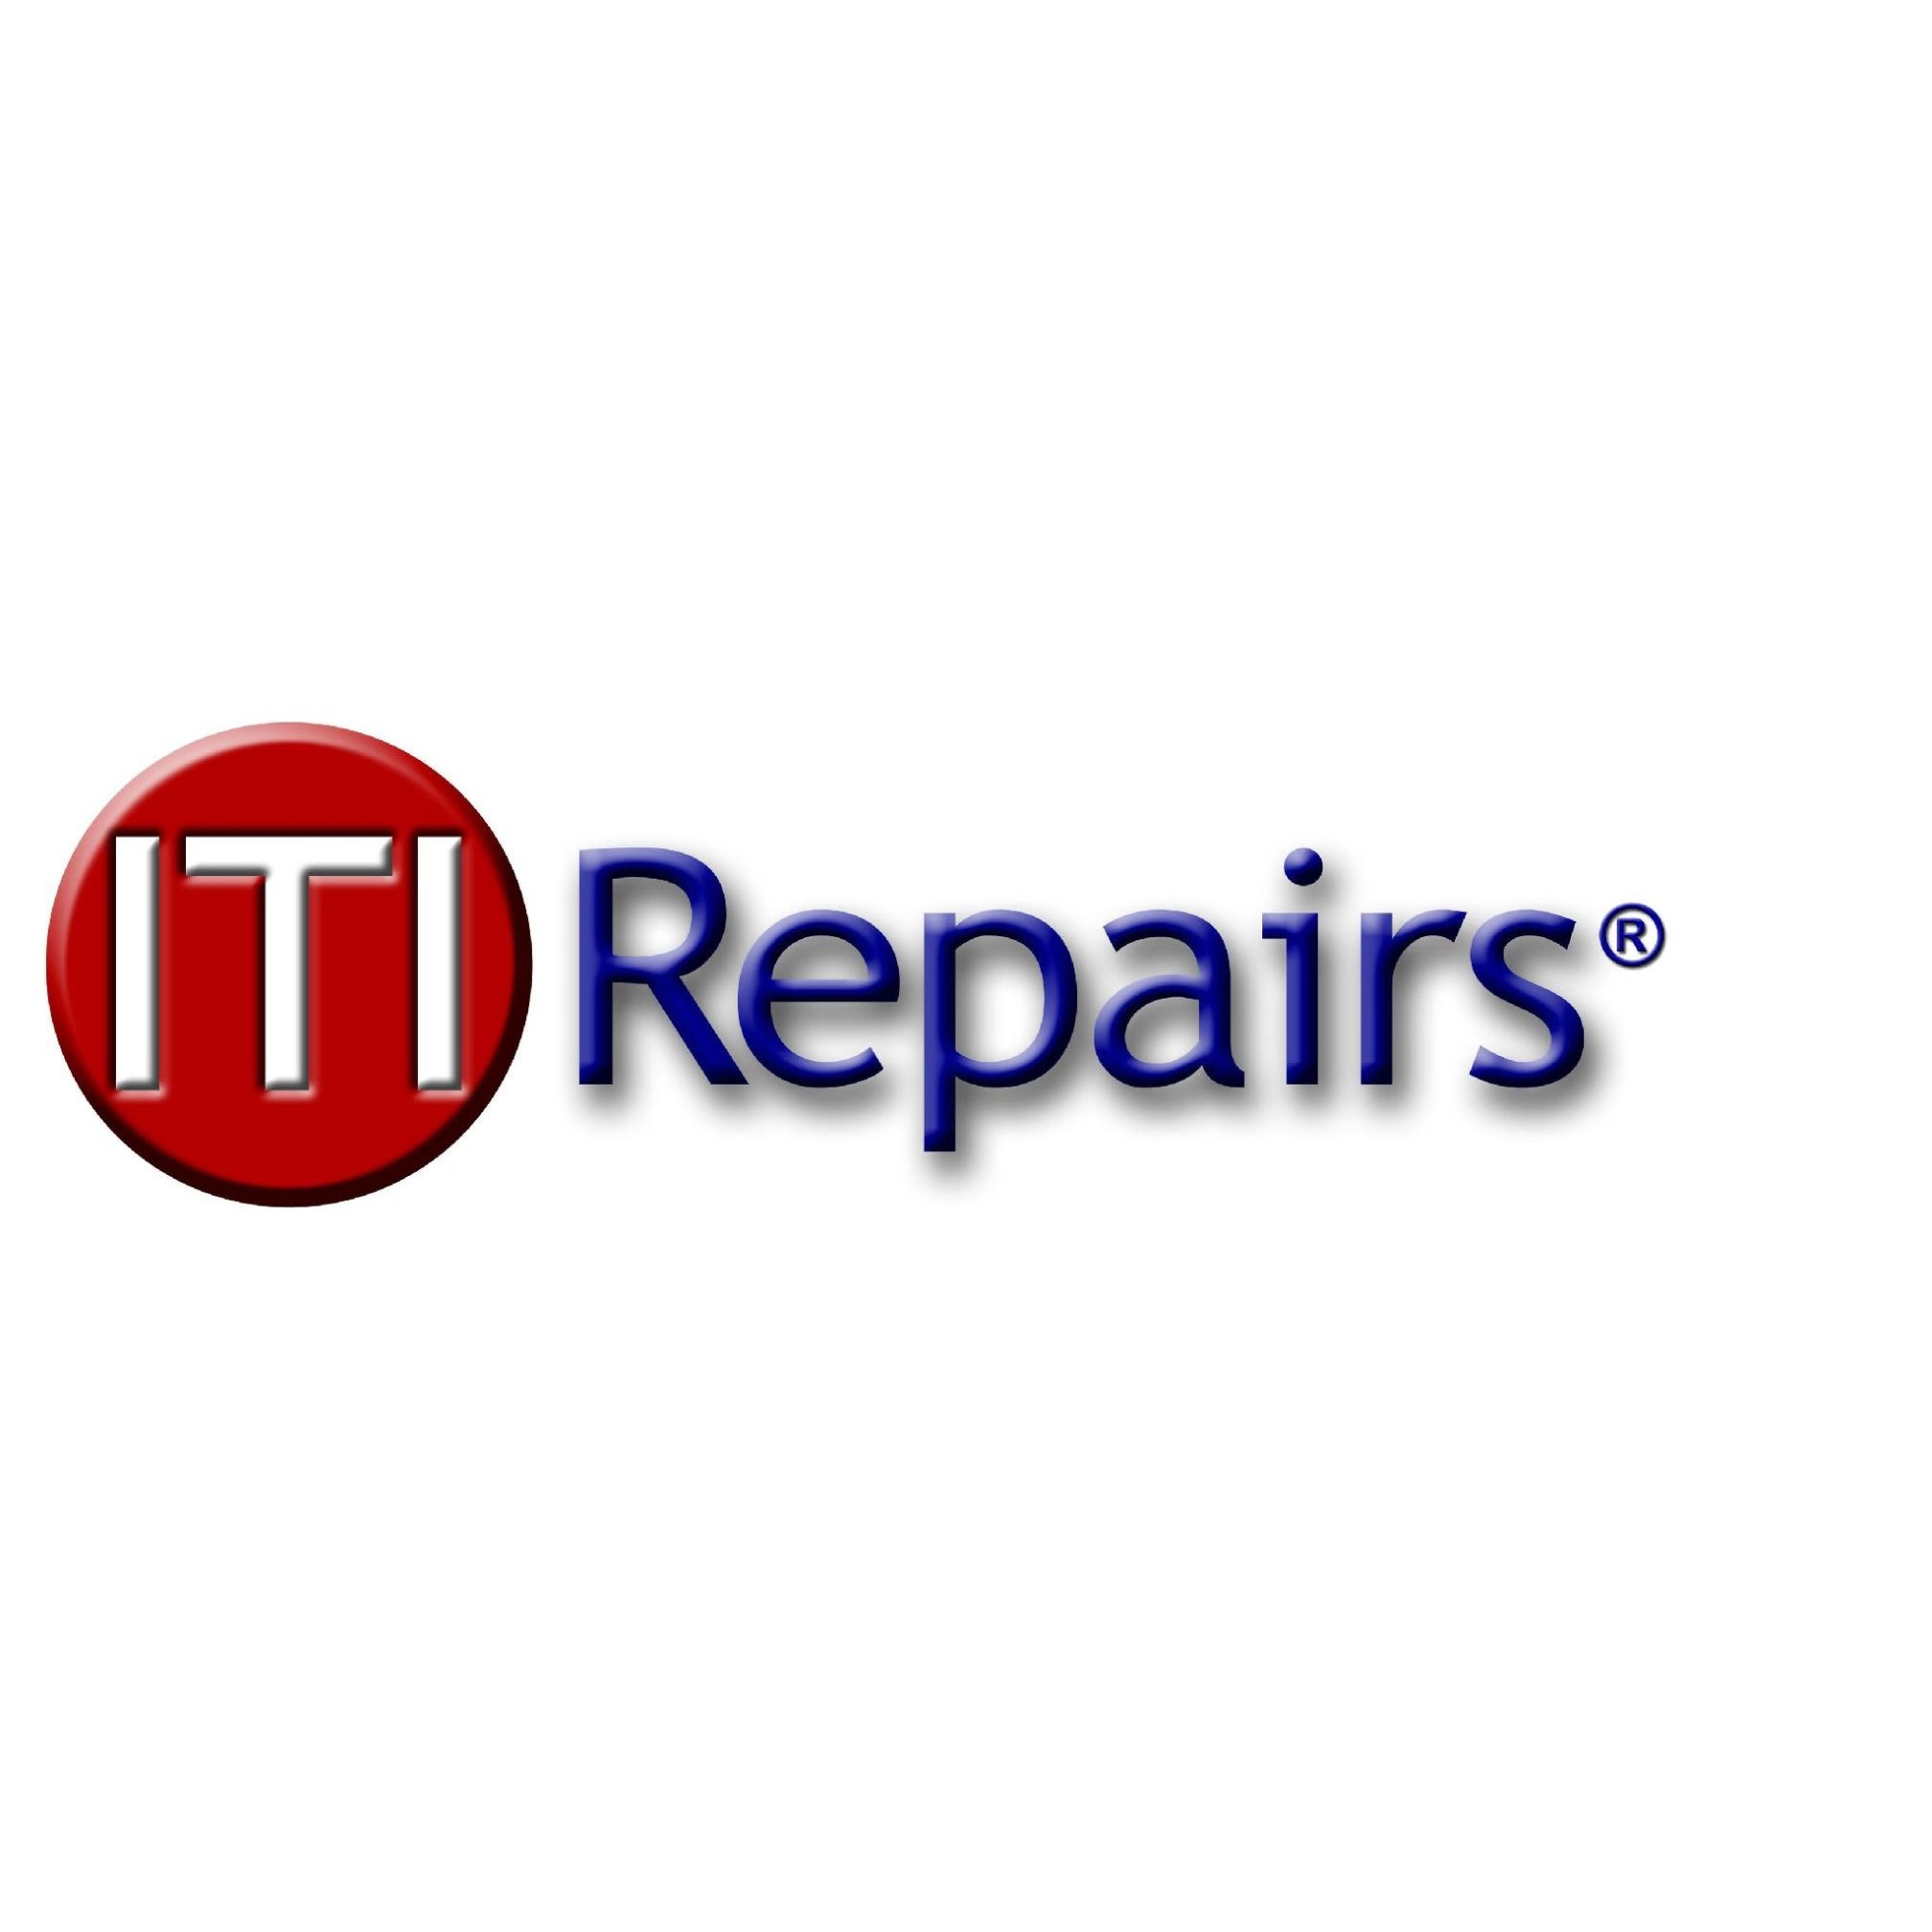 ITI Repairs Ltd - London, London E12 6SA - 07889 121609 | ShowMeLocal.com